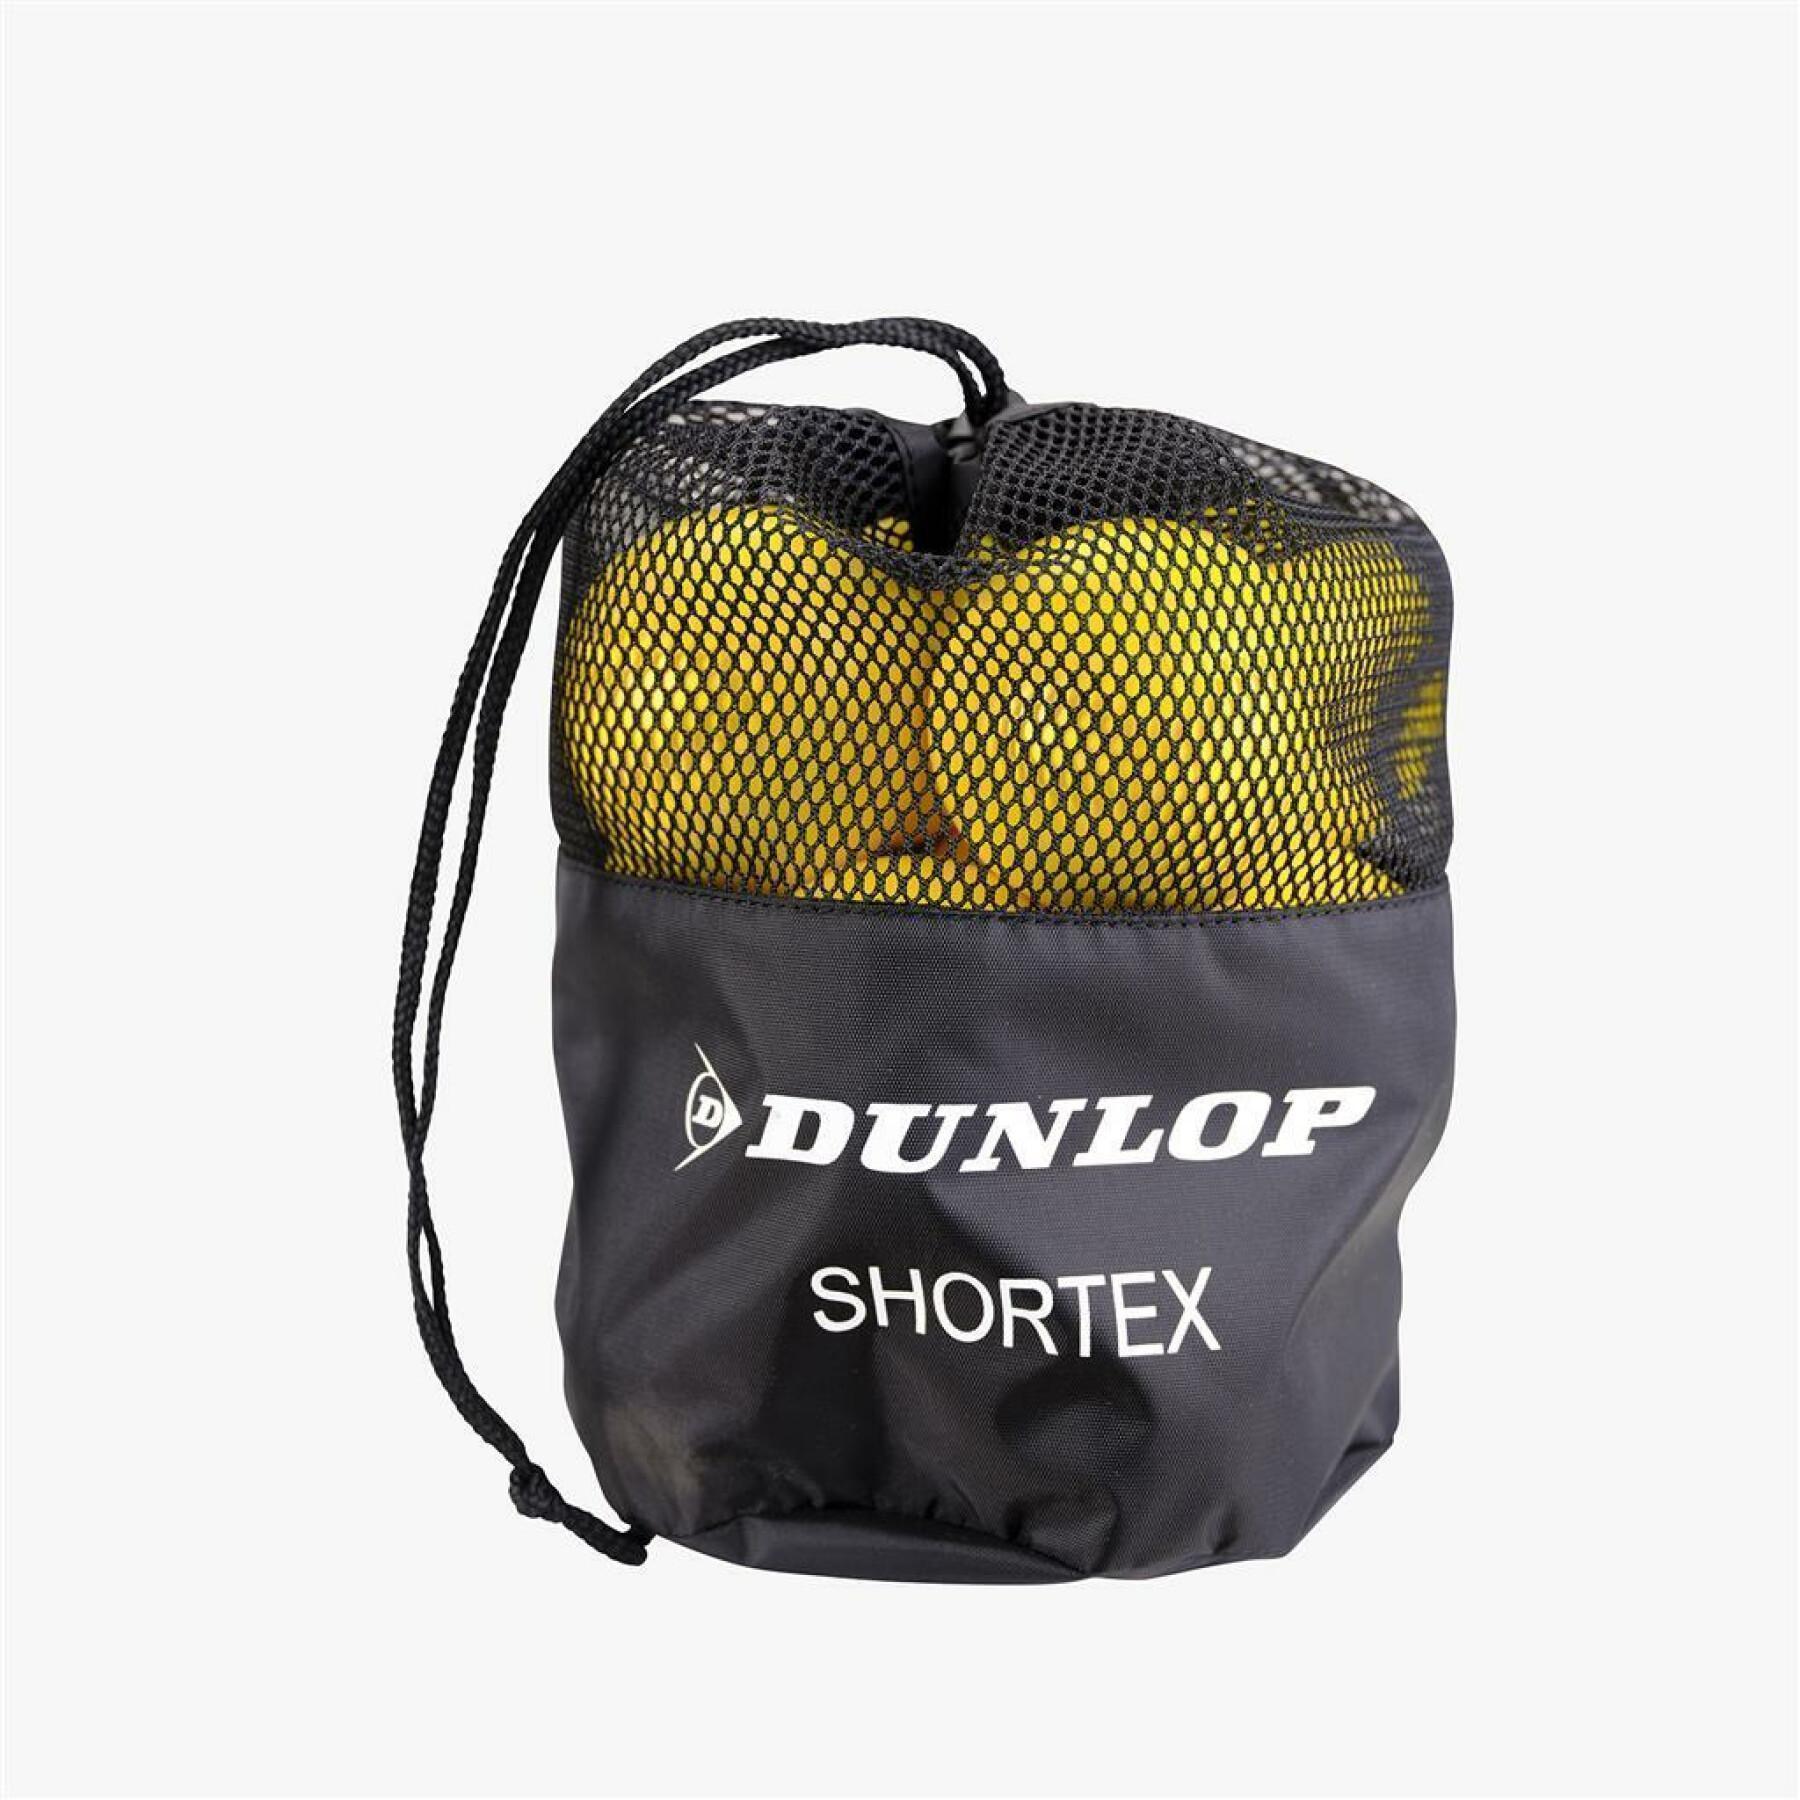 Conjunto de 12 bolas de ténis Dunlop Shortex